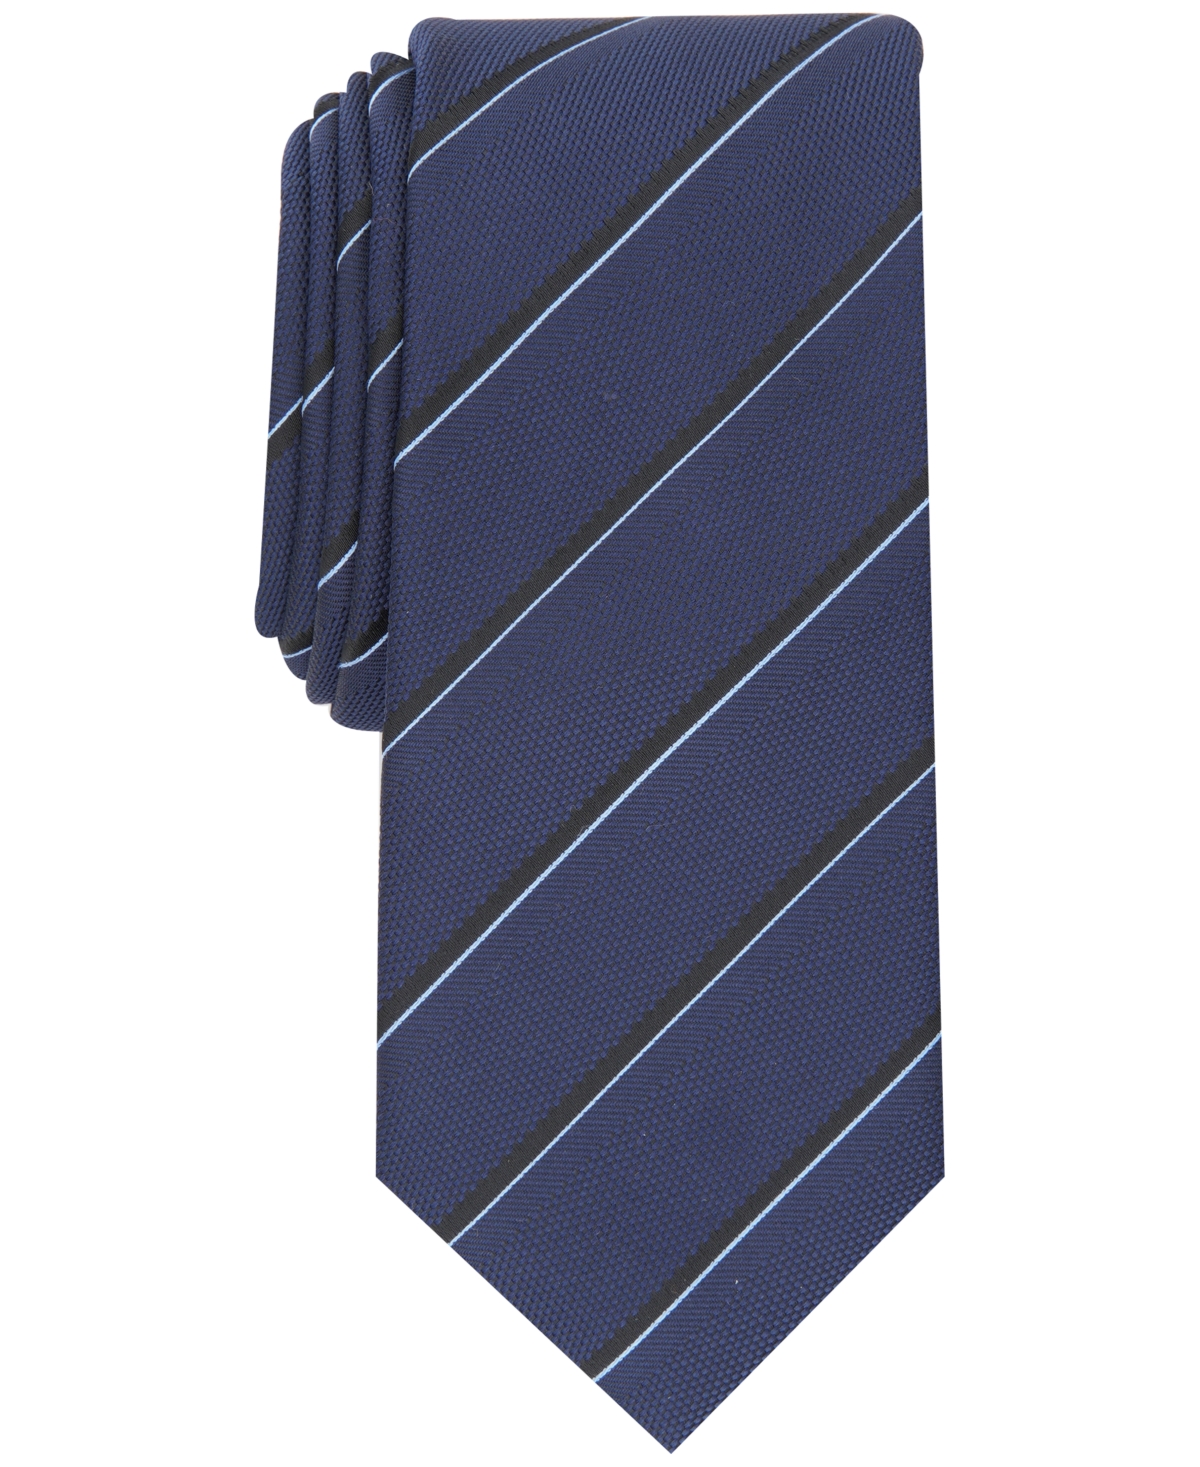 Men's Clarkson Stripe Tie, Created for Macy's - Navy